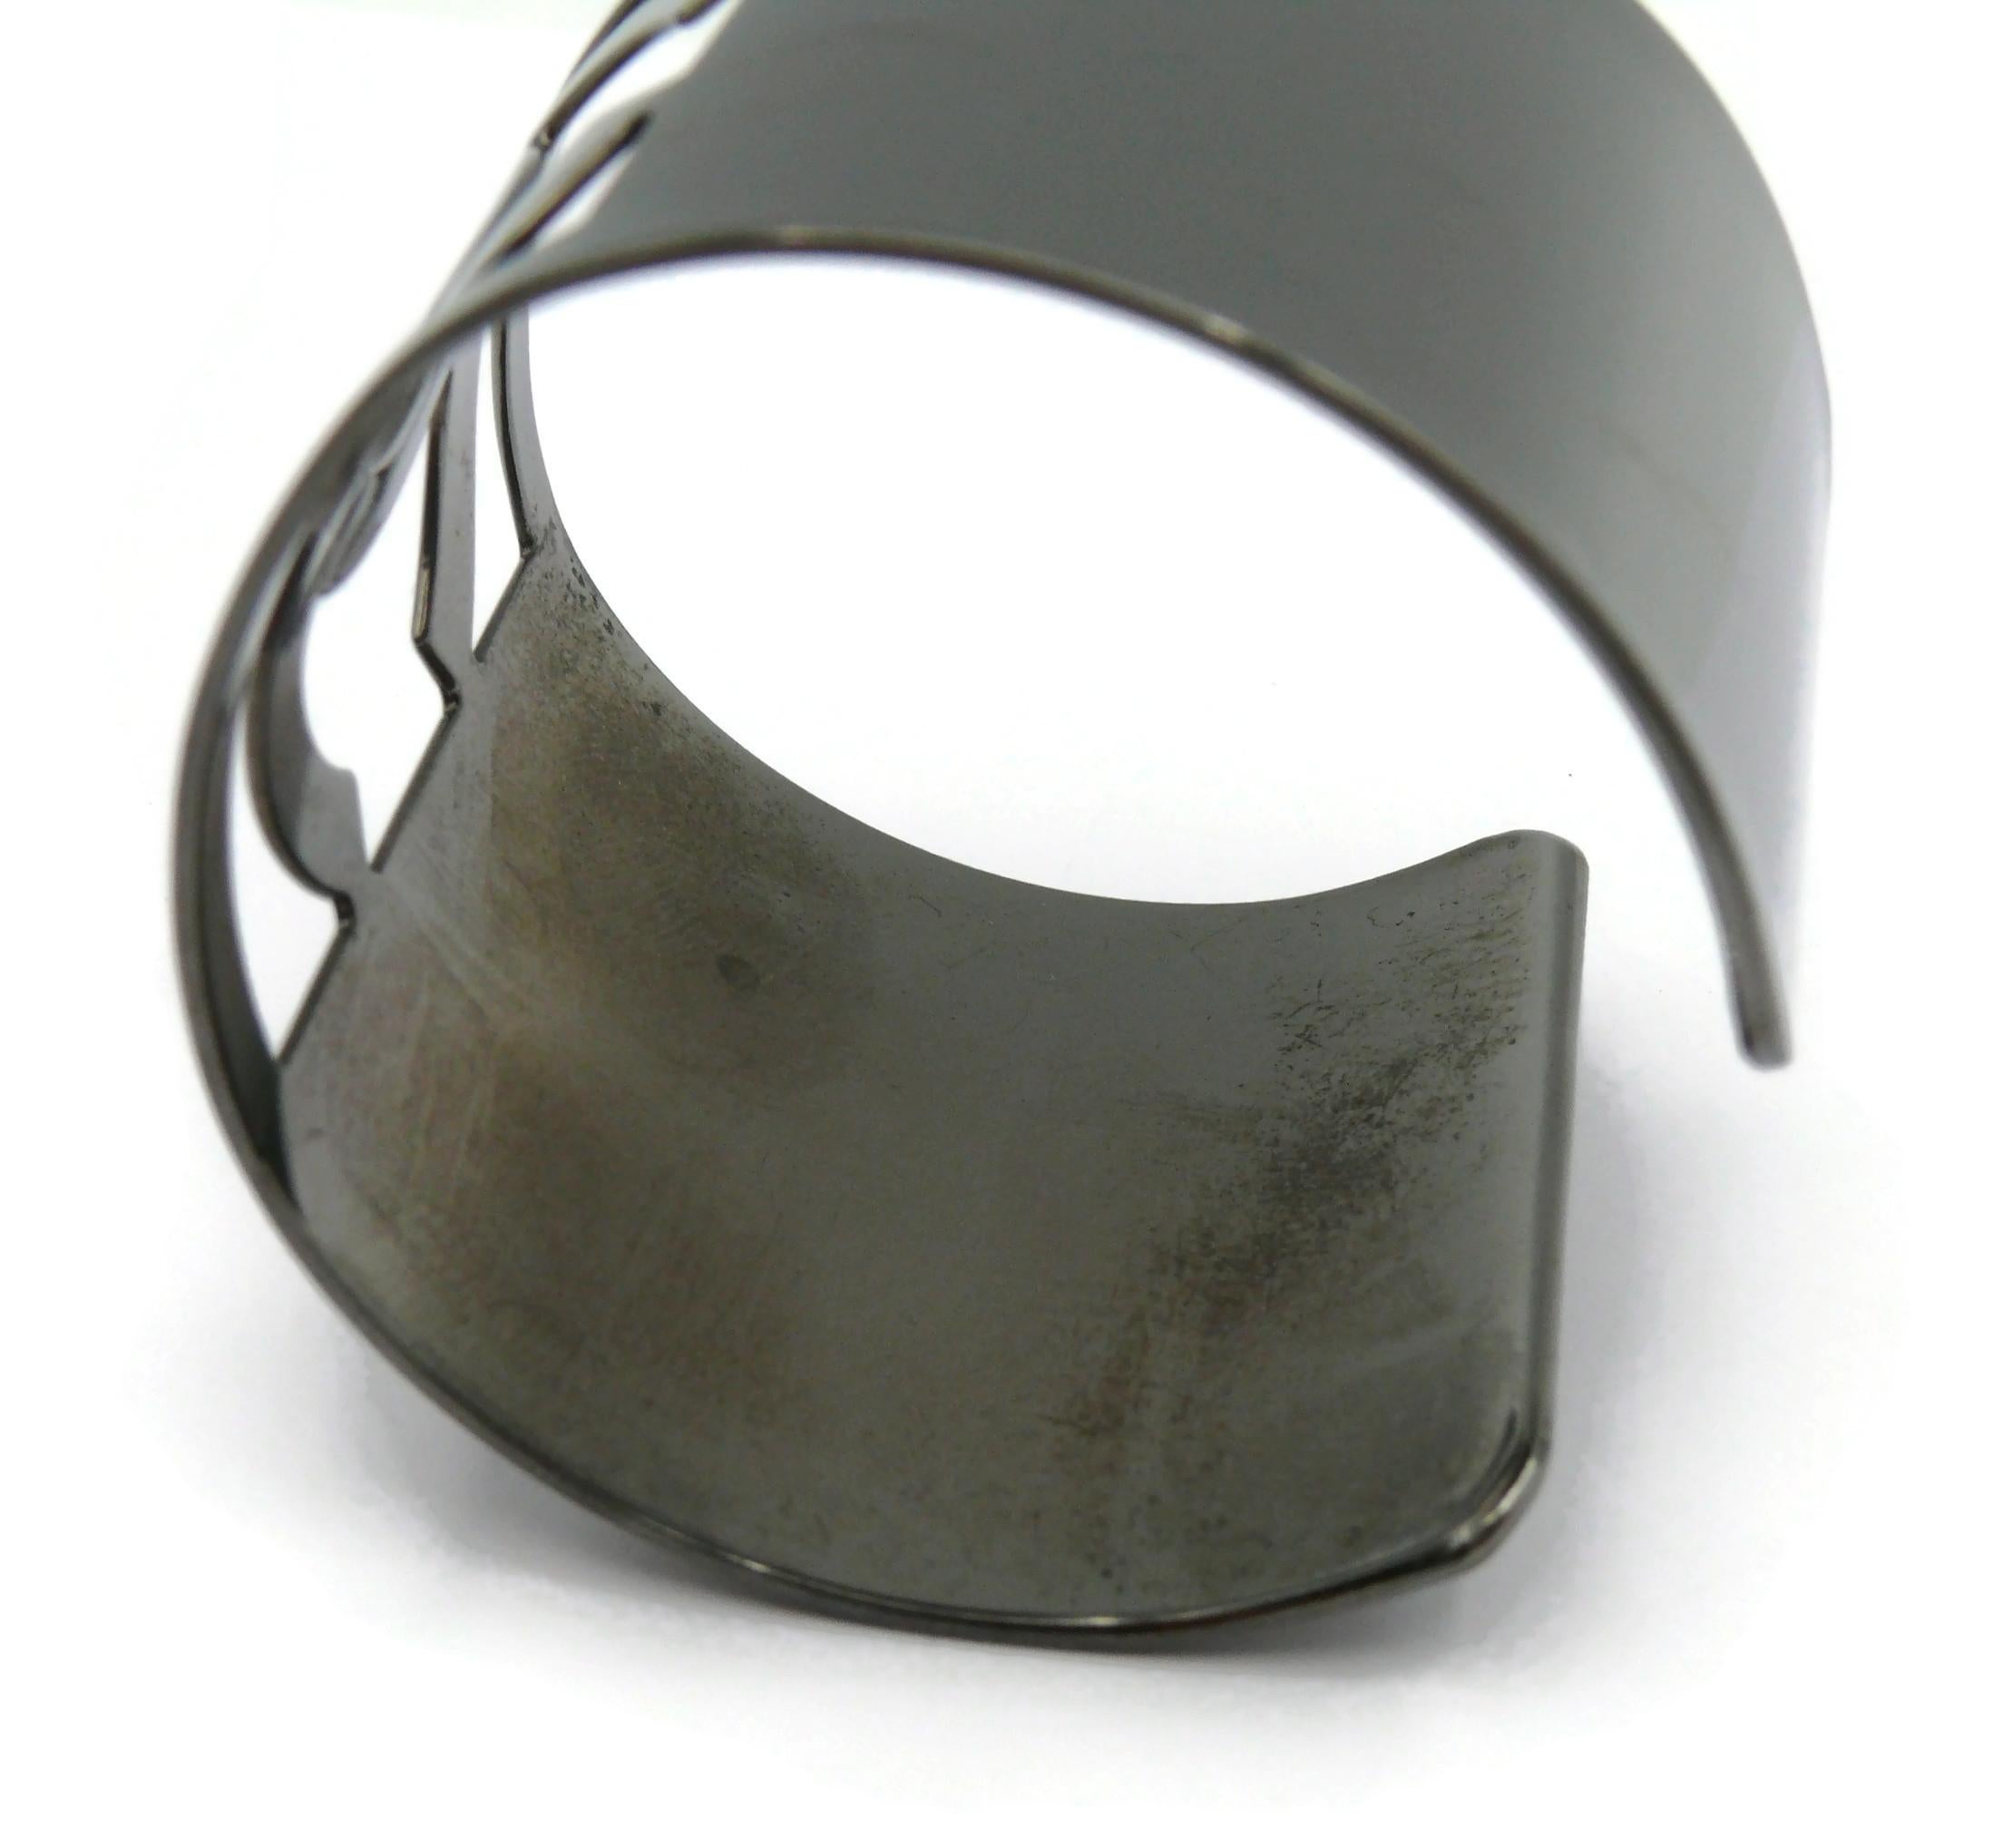 CHANEL by KARL LAGERFELD Cut-Out CC Logo Ruthenium Cuff Bracelet, Autumn 2006 For Sale 4